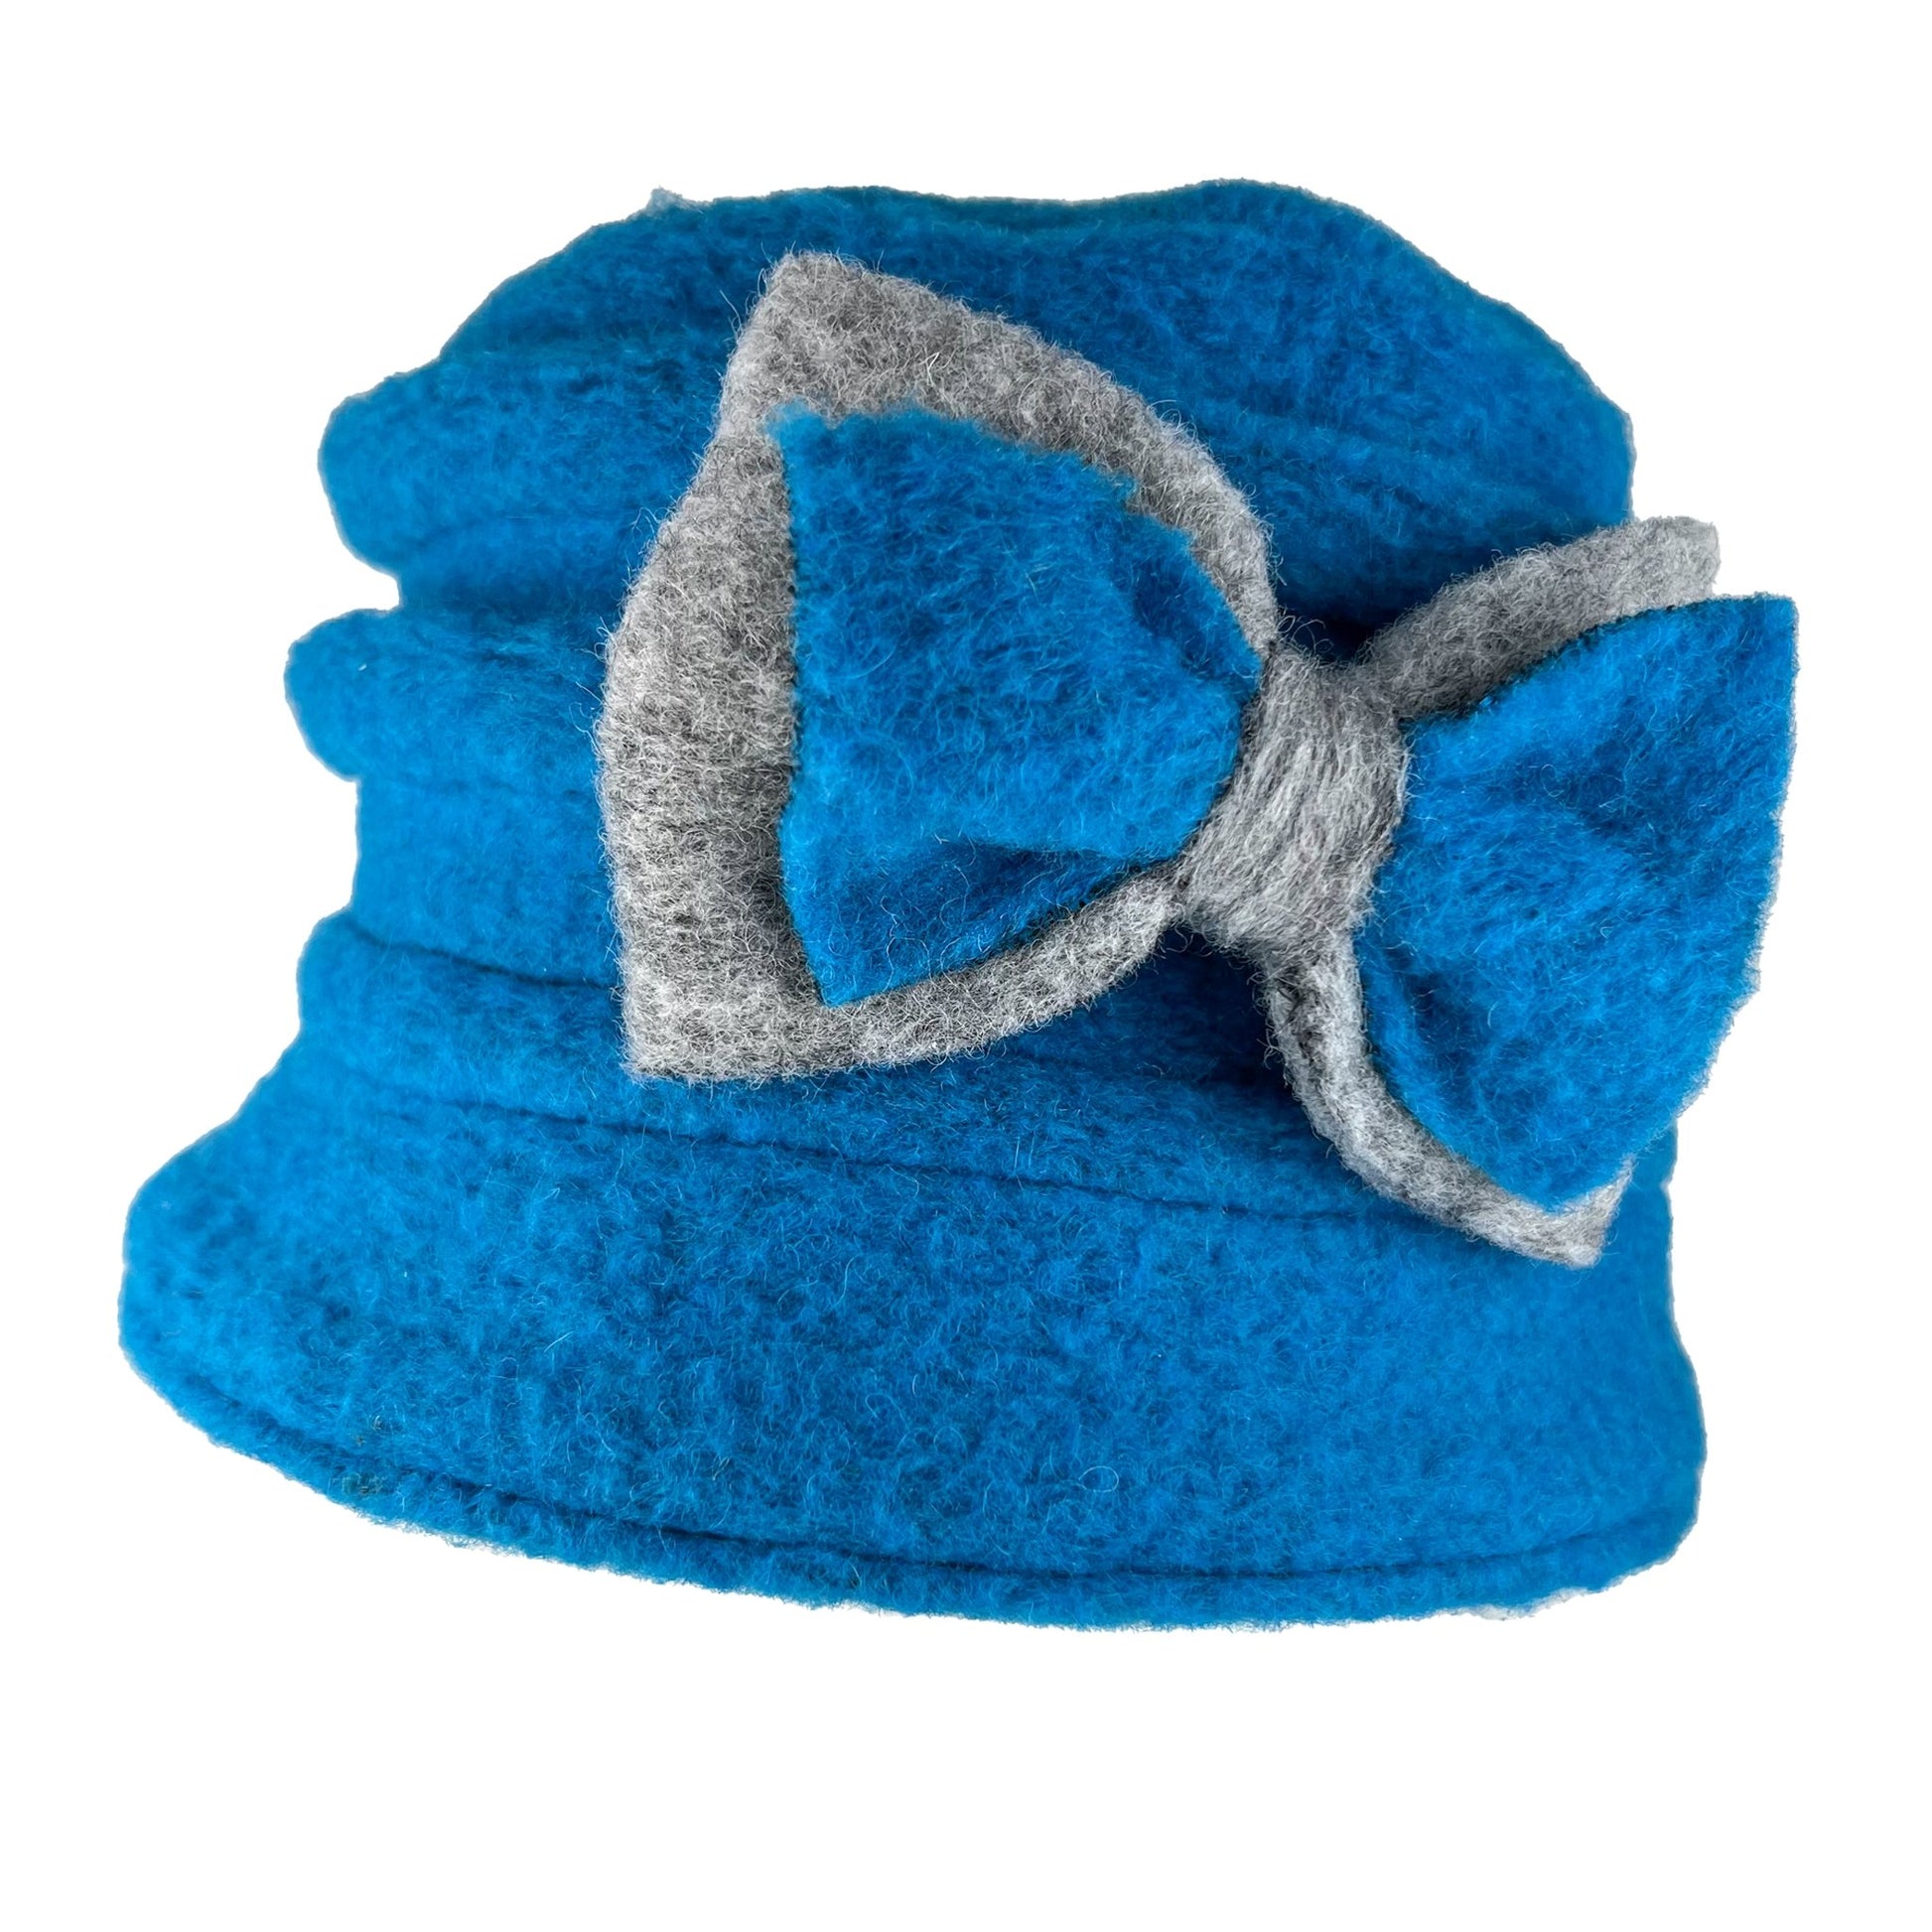 Elisabet - wool hat - turquoise/grey - nammi.isÓfeigur